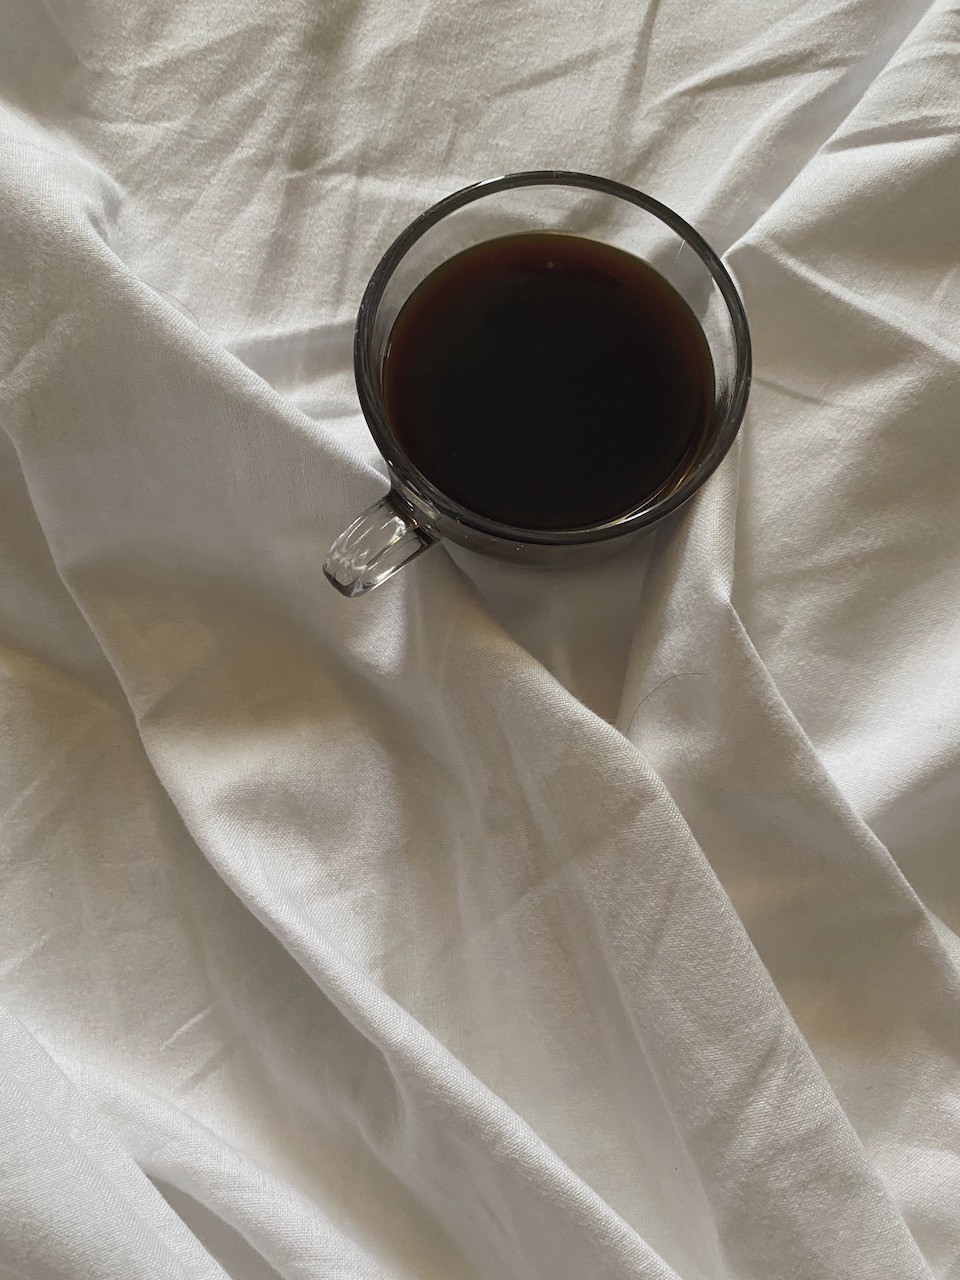 Bild Kaffee Im Bett